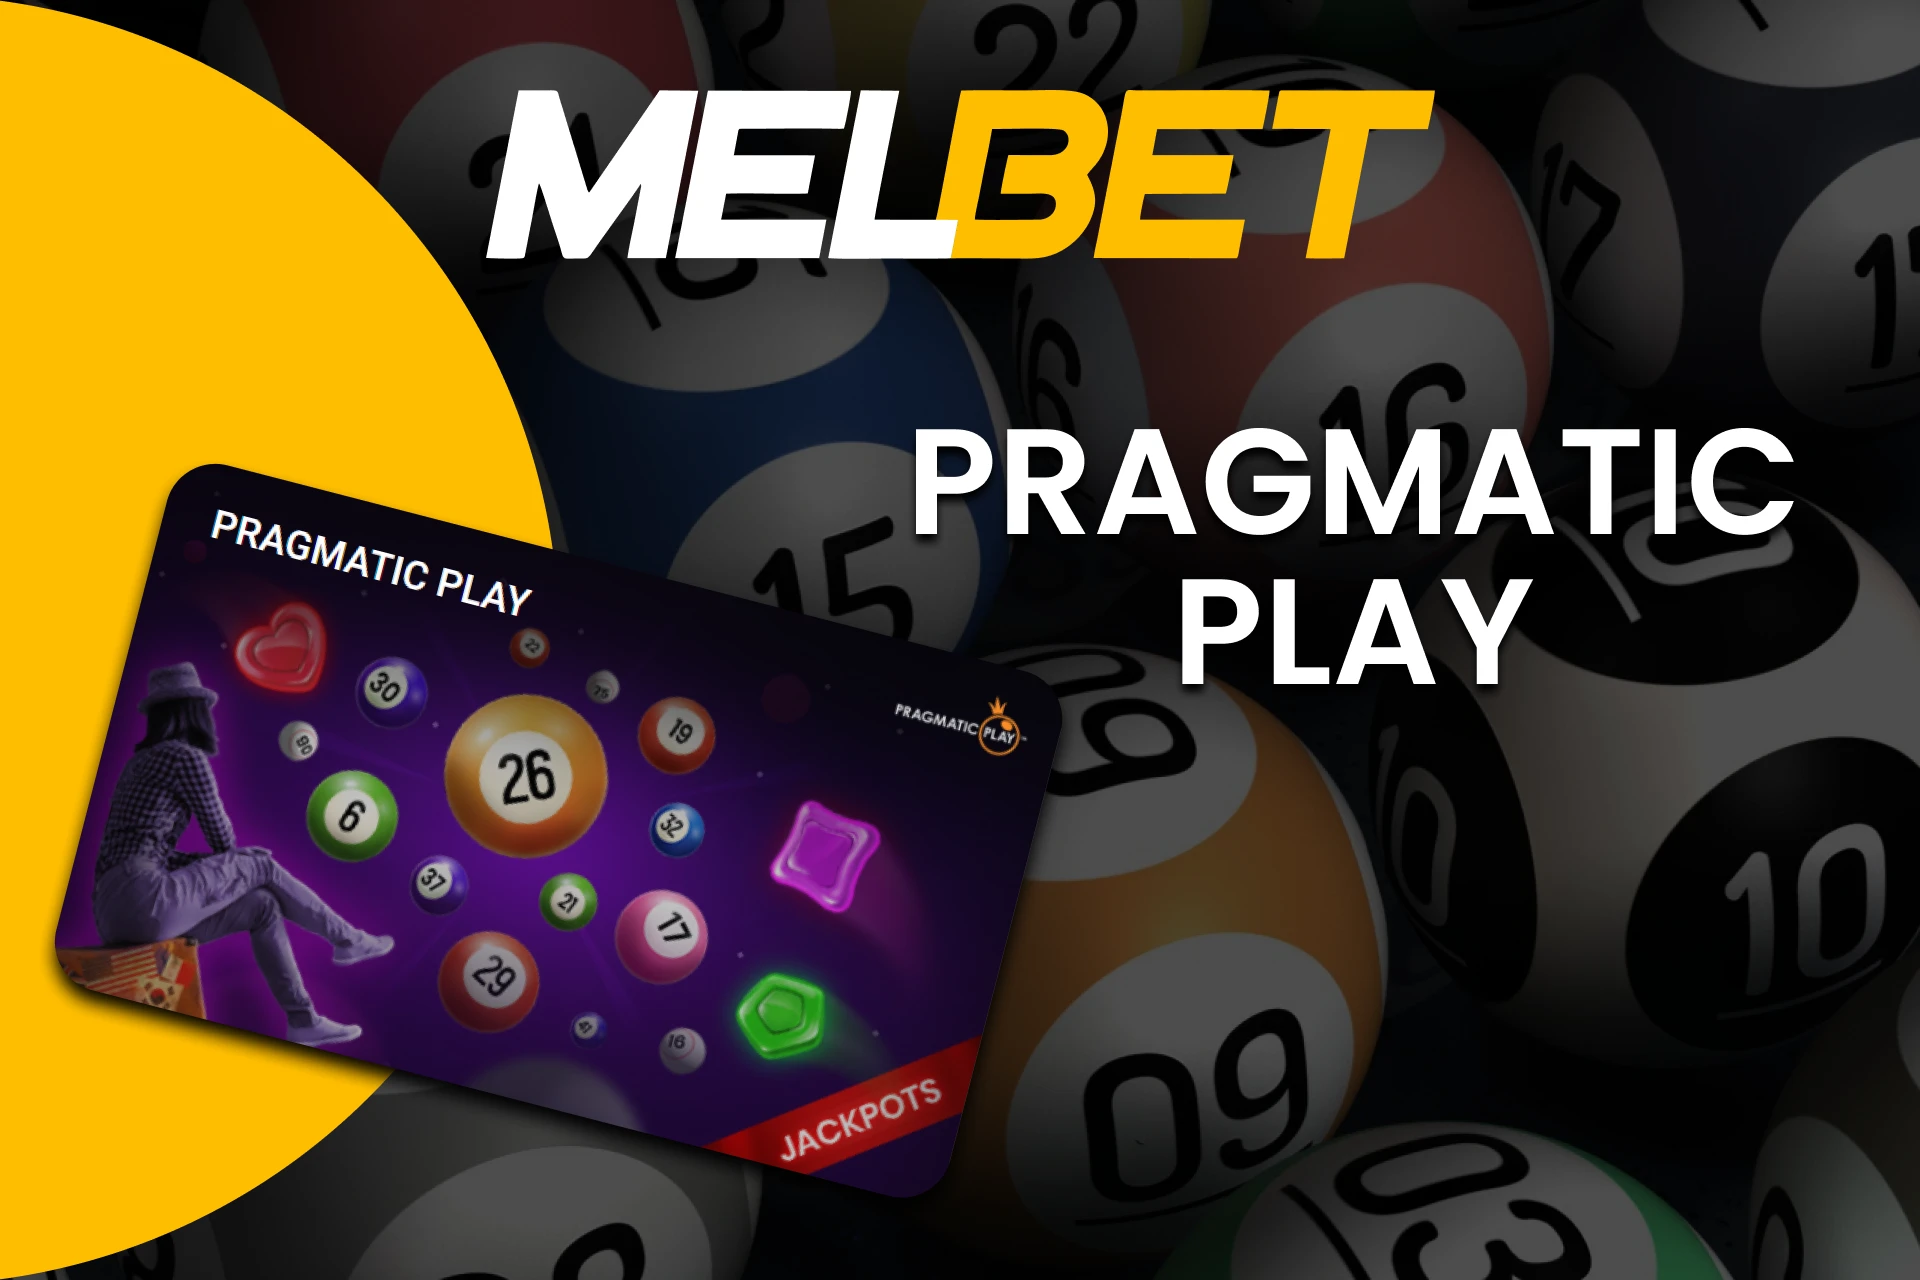 To play Bingo, choose Pragmatic Play from Melbet.